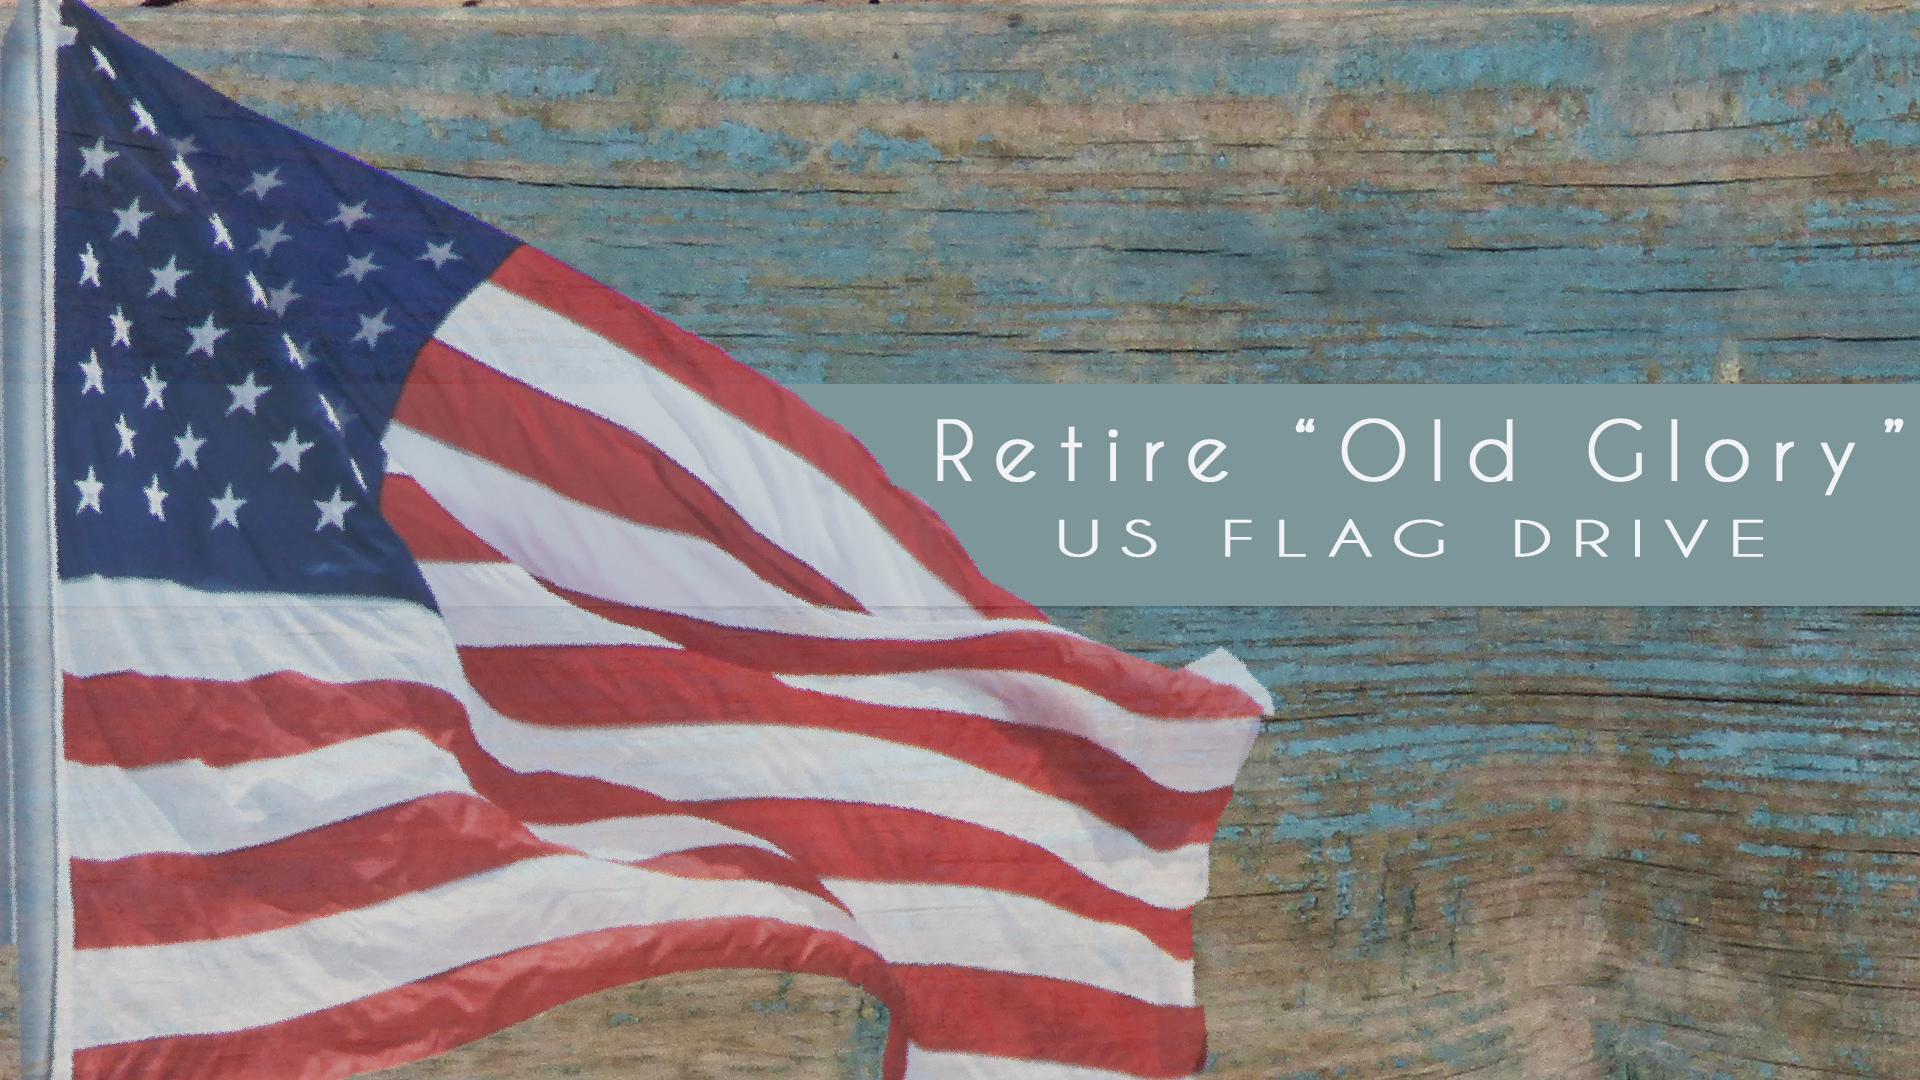 Seagrove Beach Real Estate Company hosting “Retire Old Glory” US Flag Drive